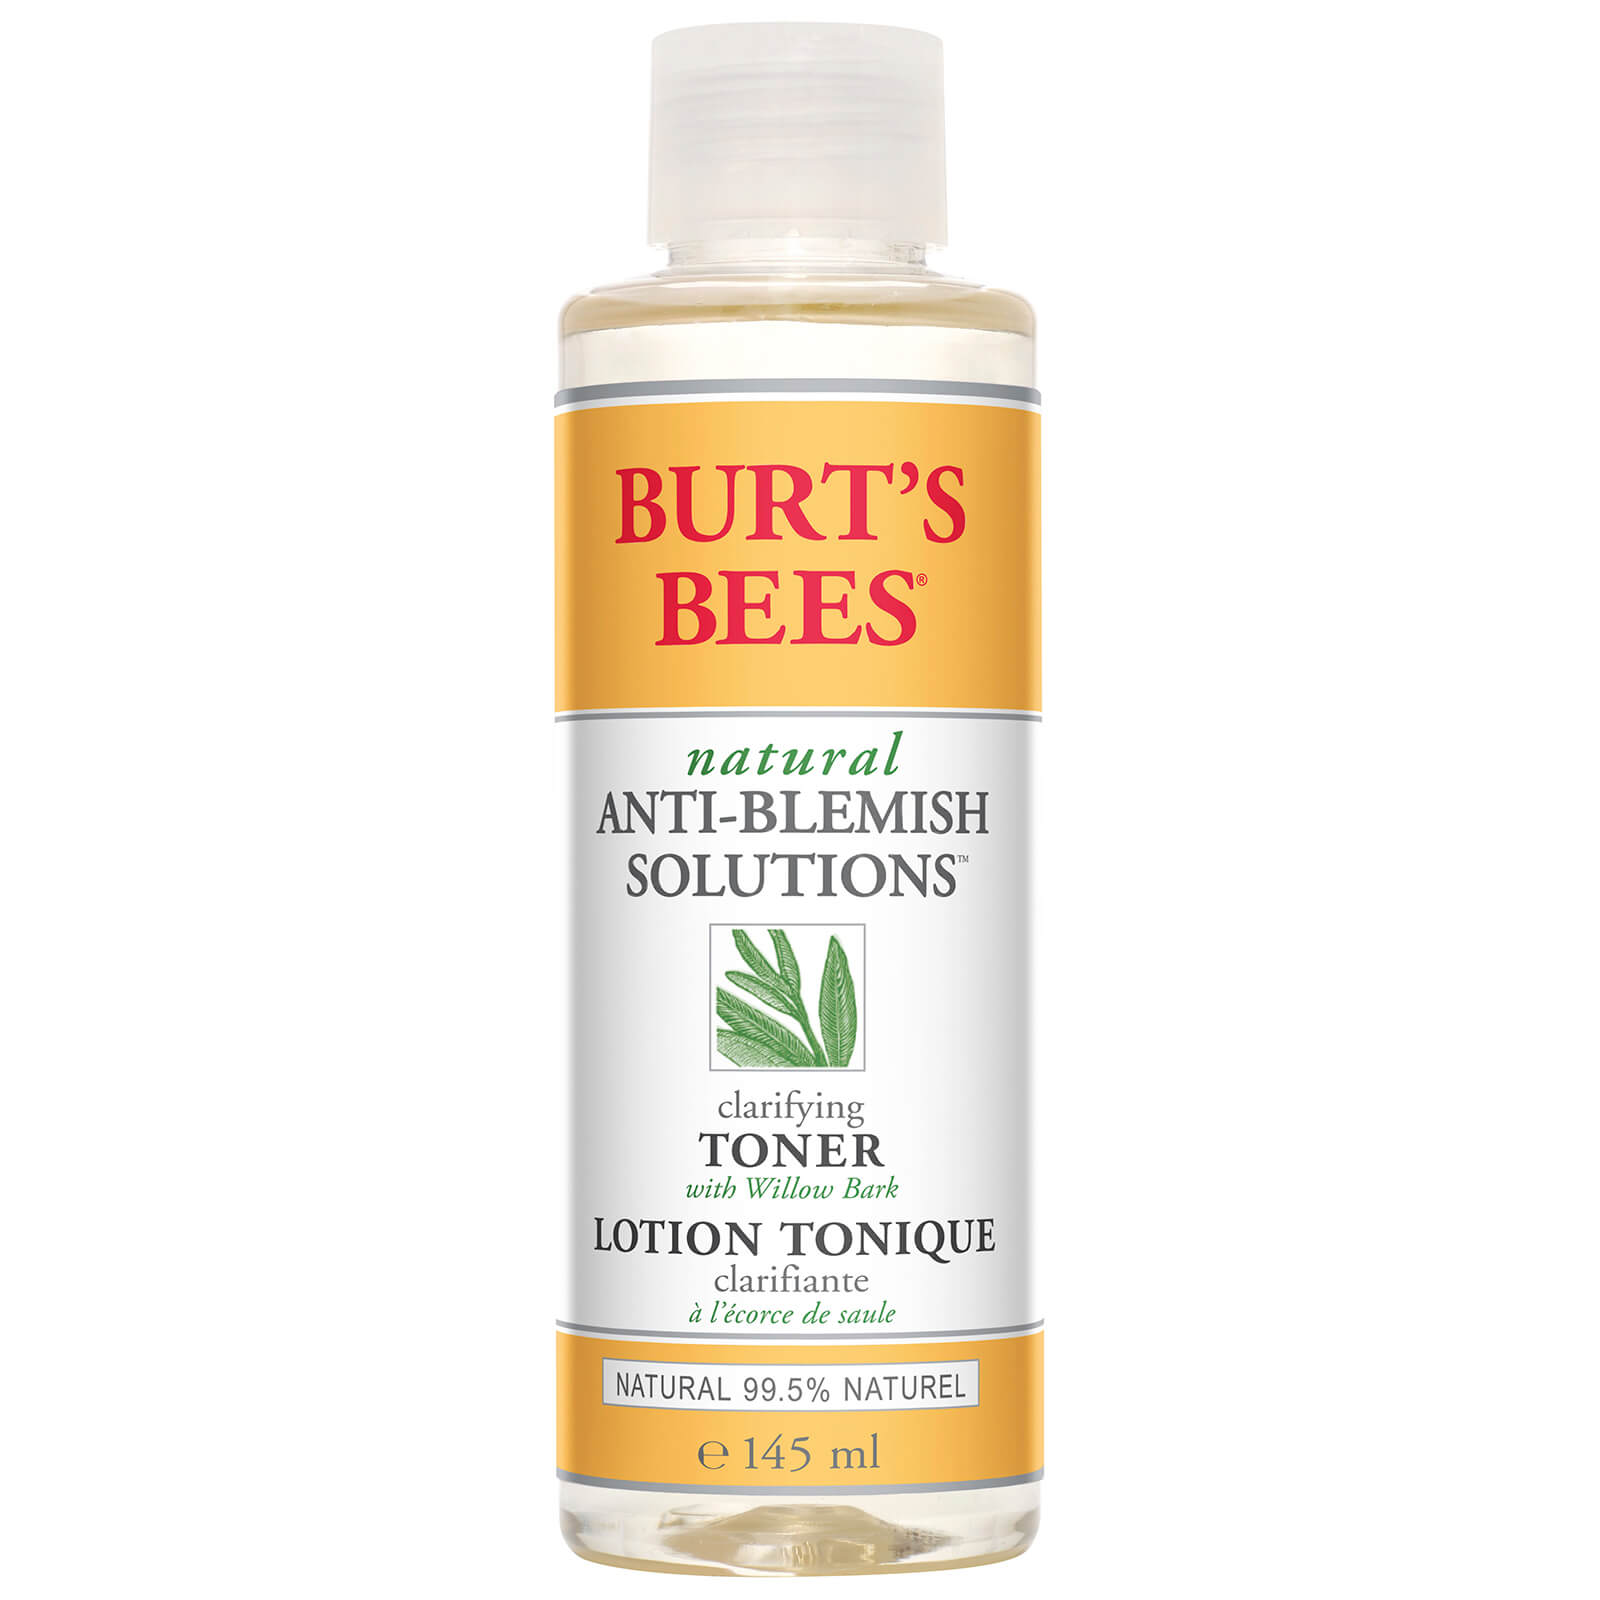 Burt's Bees Anti-Blemish Solutions Clarifying Toner 145ml